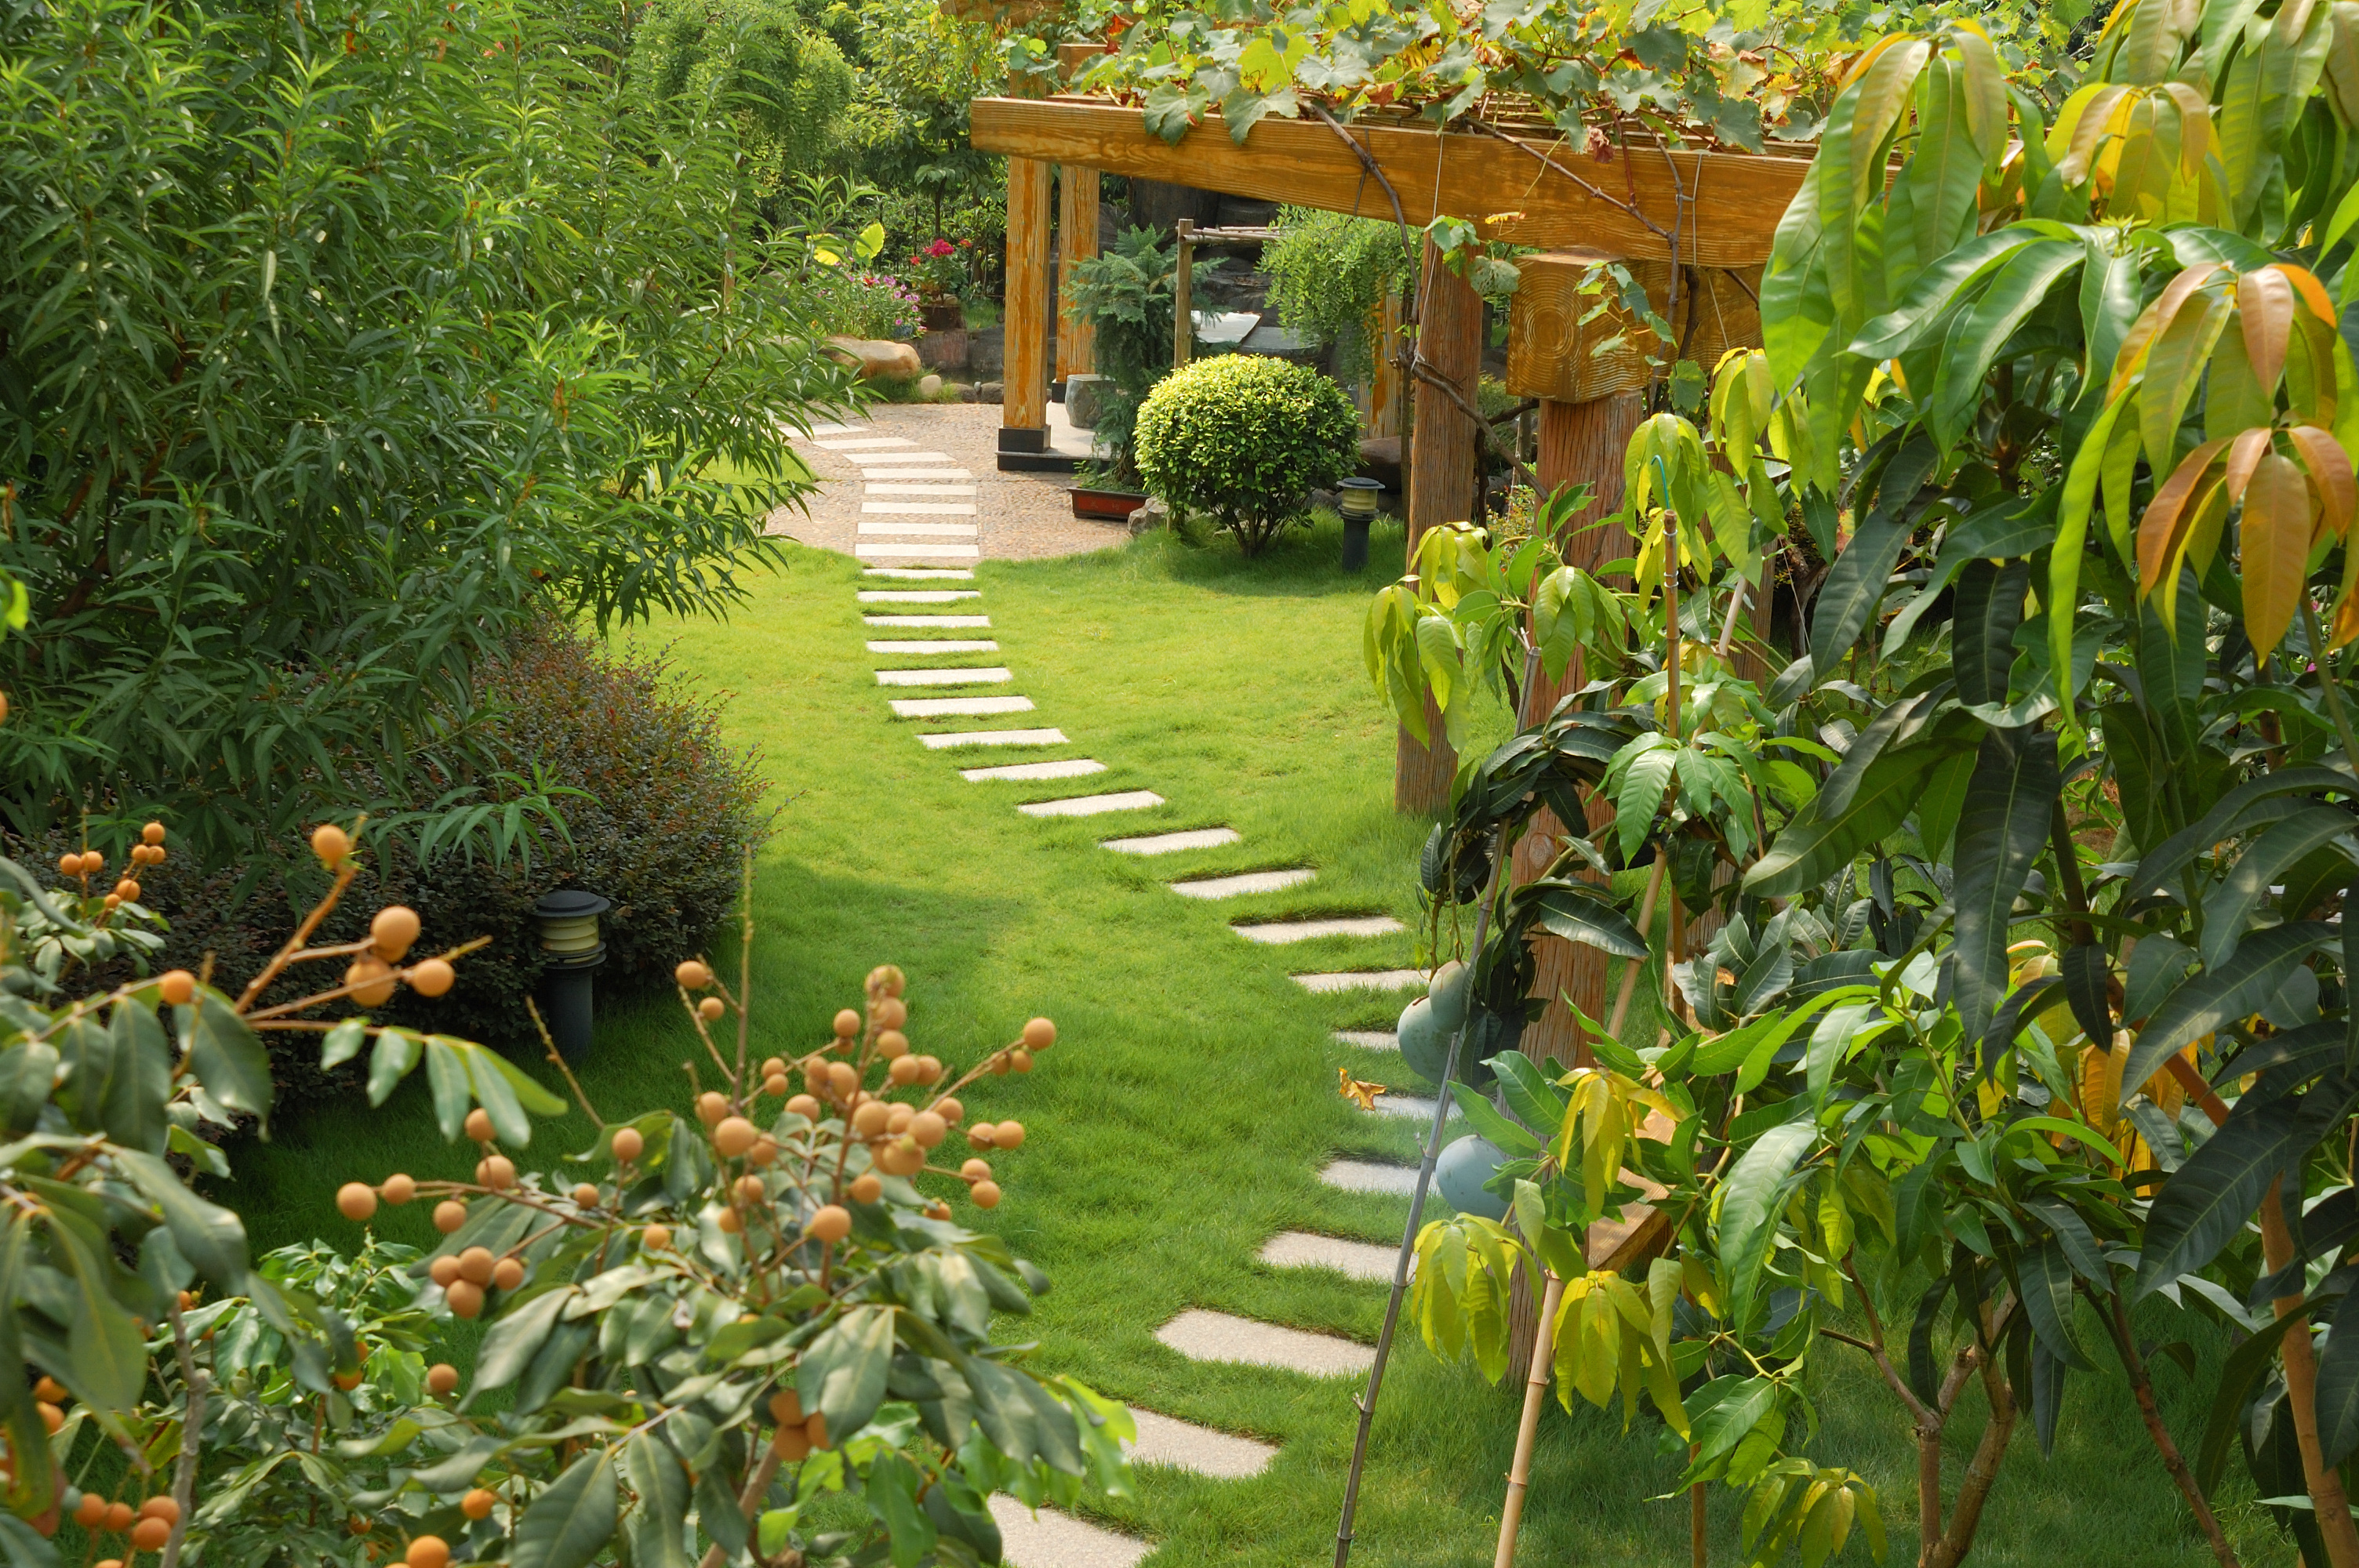 A stone walkway winding its way through a tranquil garden